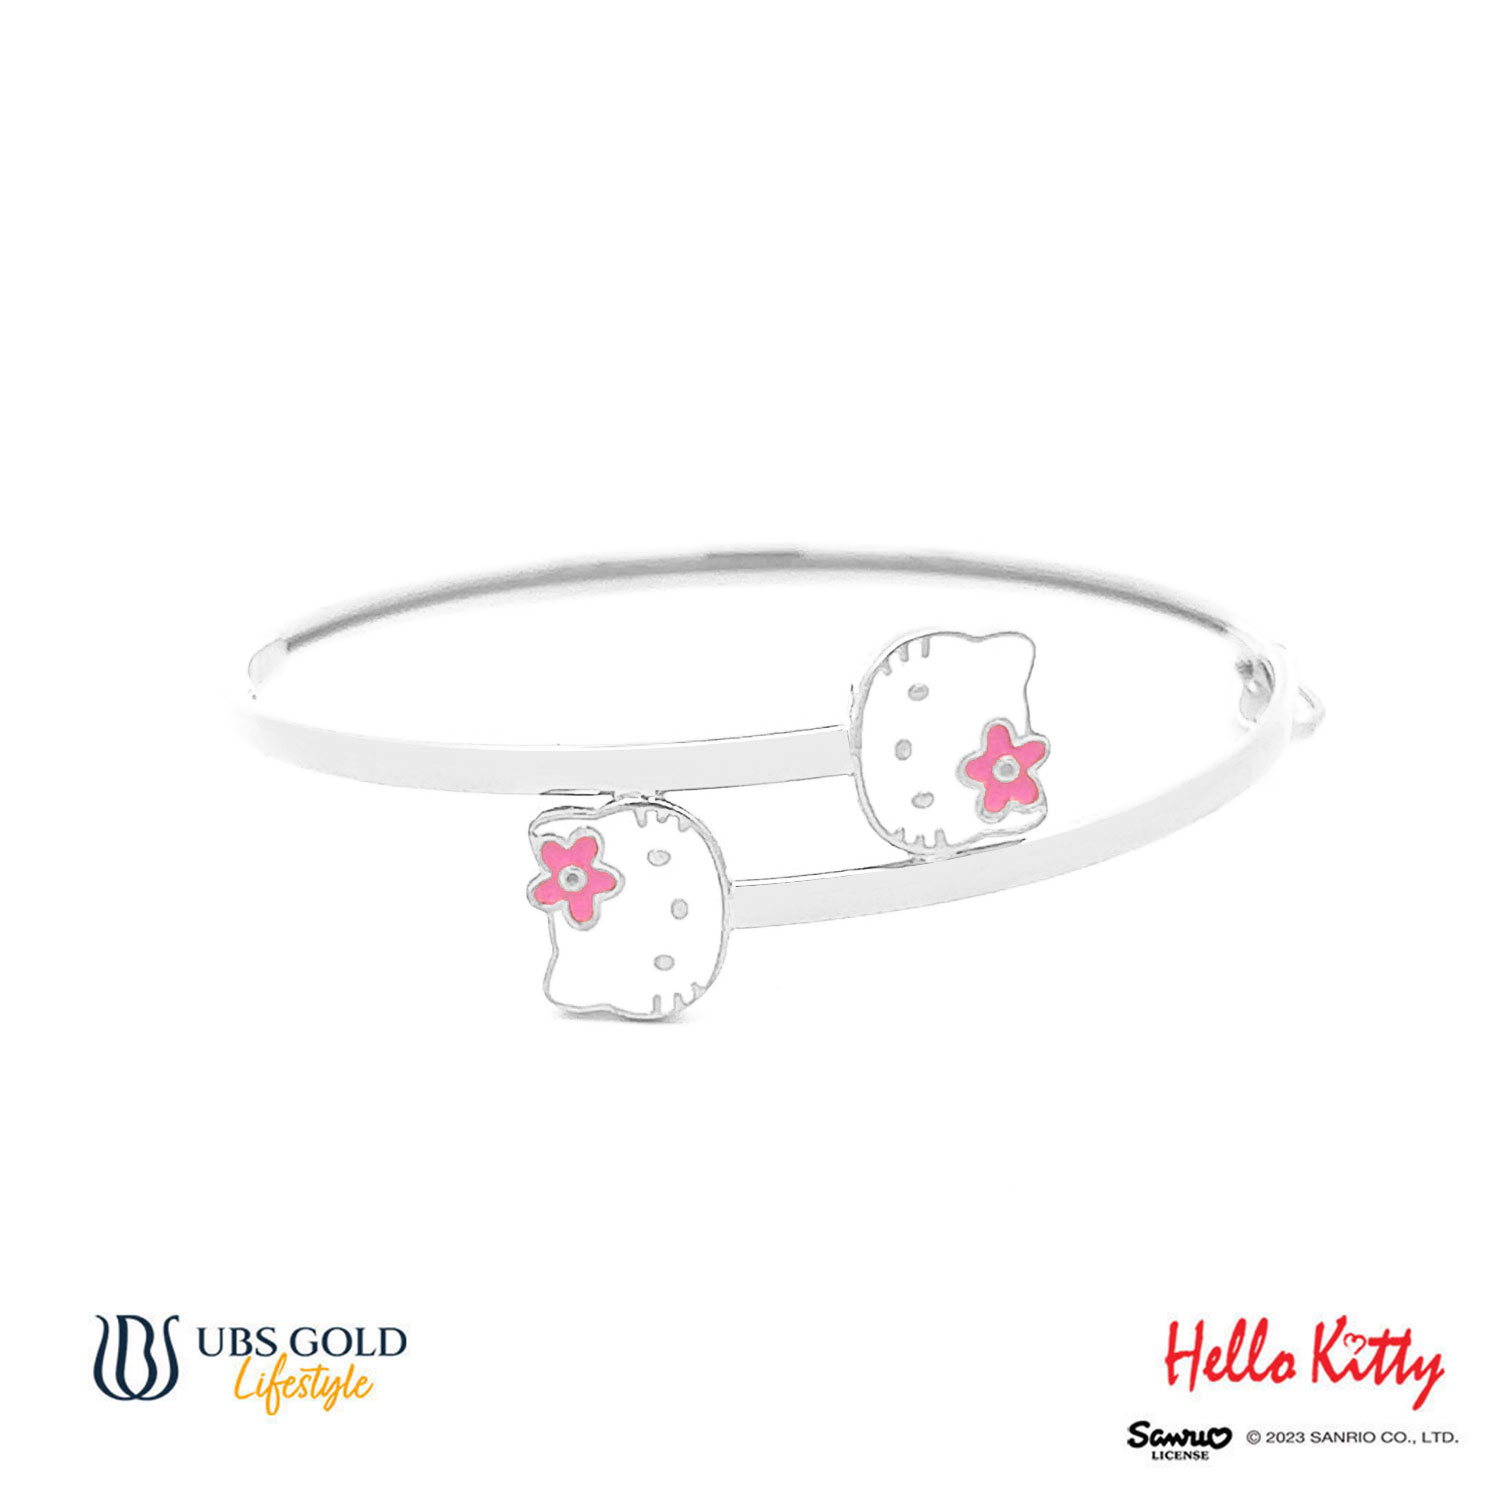 UBS Gold Gelang Emas Bayi Sanrio Hello Kitty - Vgz0042 - 17K